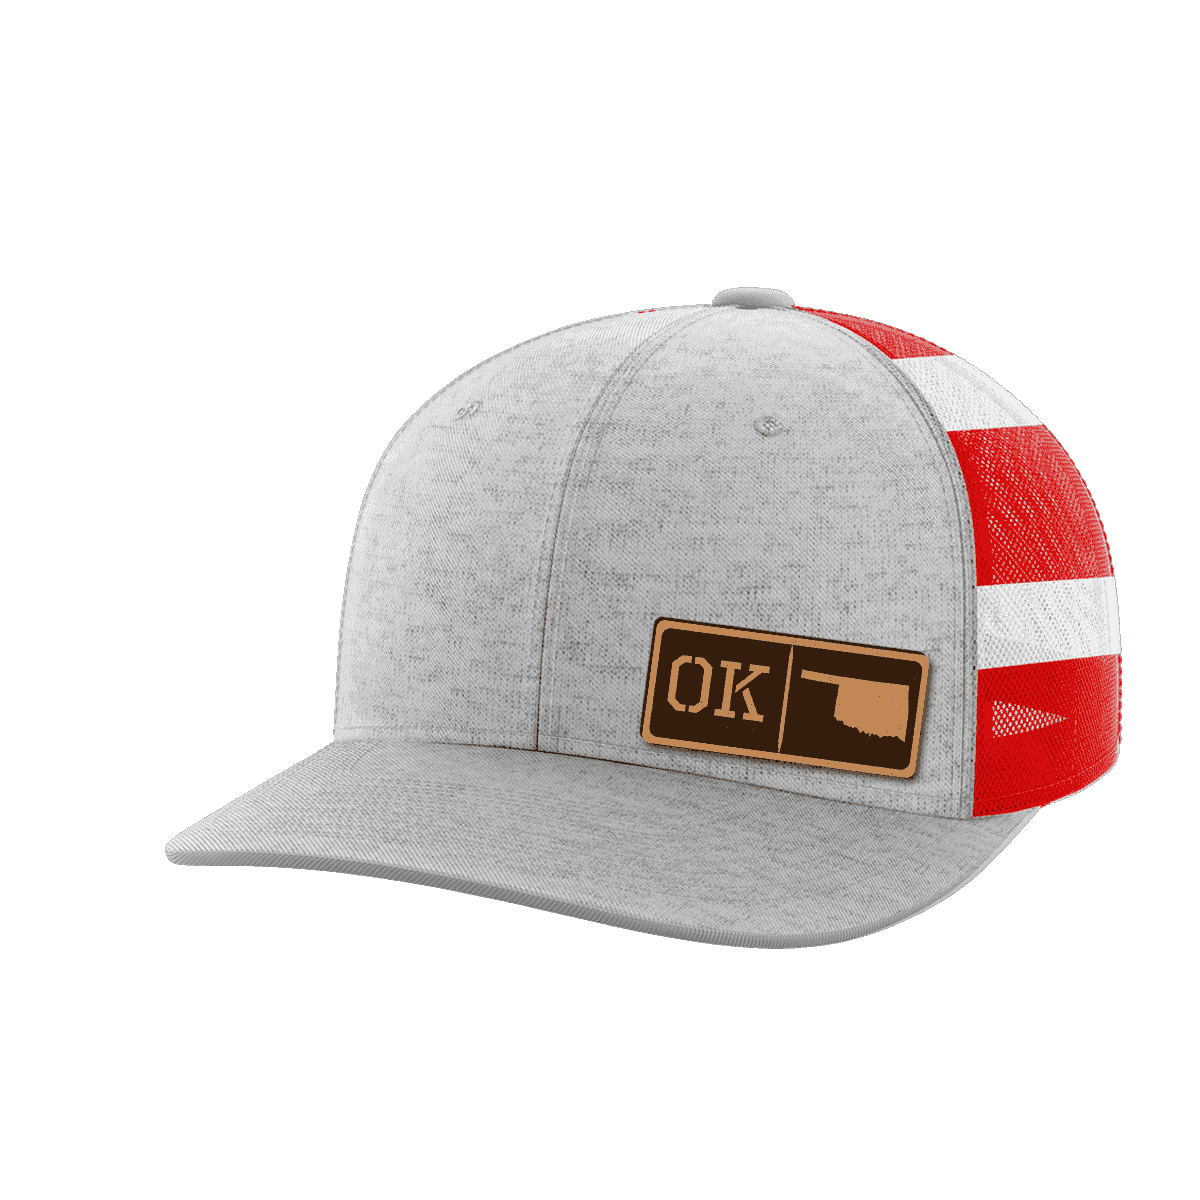 Thumbnail for Oklahoma Homegrown Hats - Greater Half